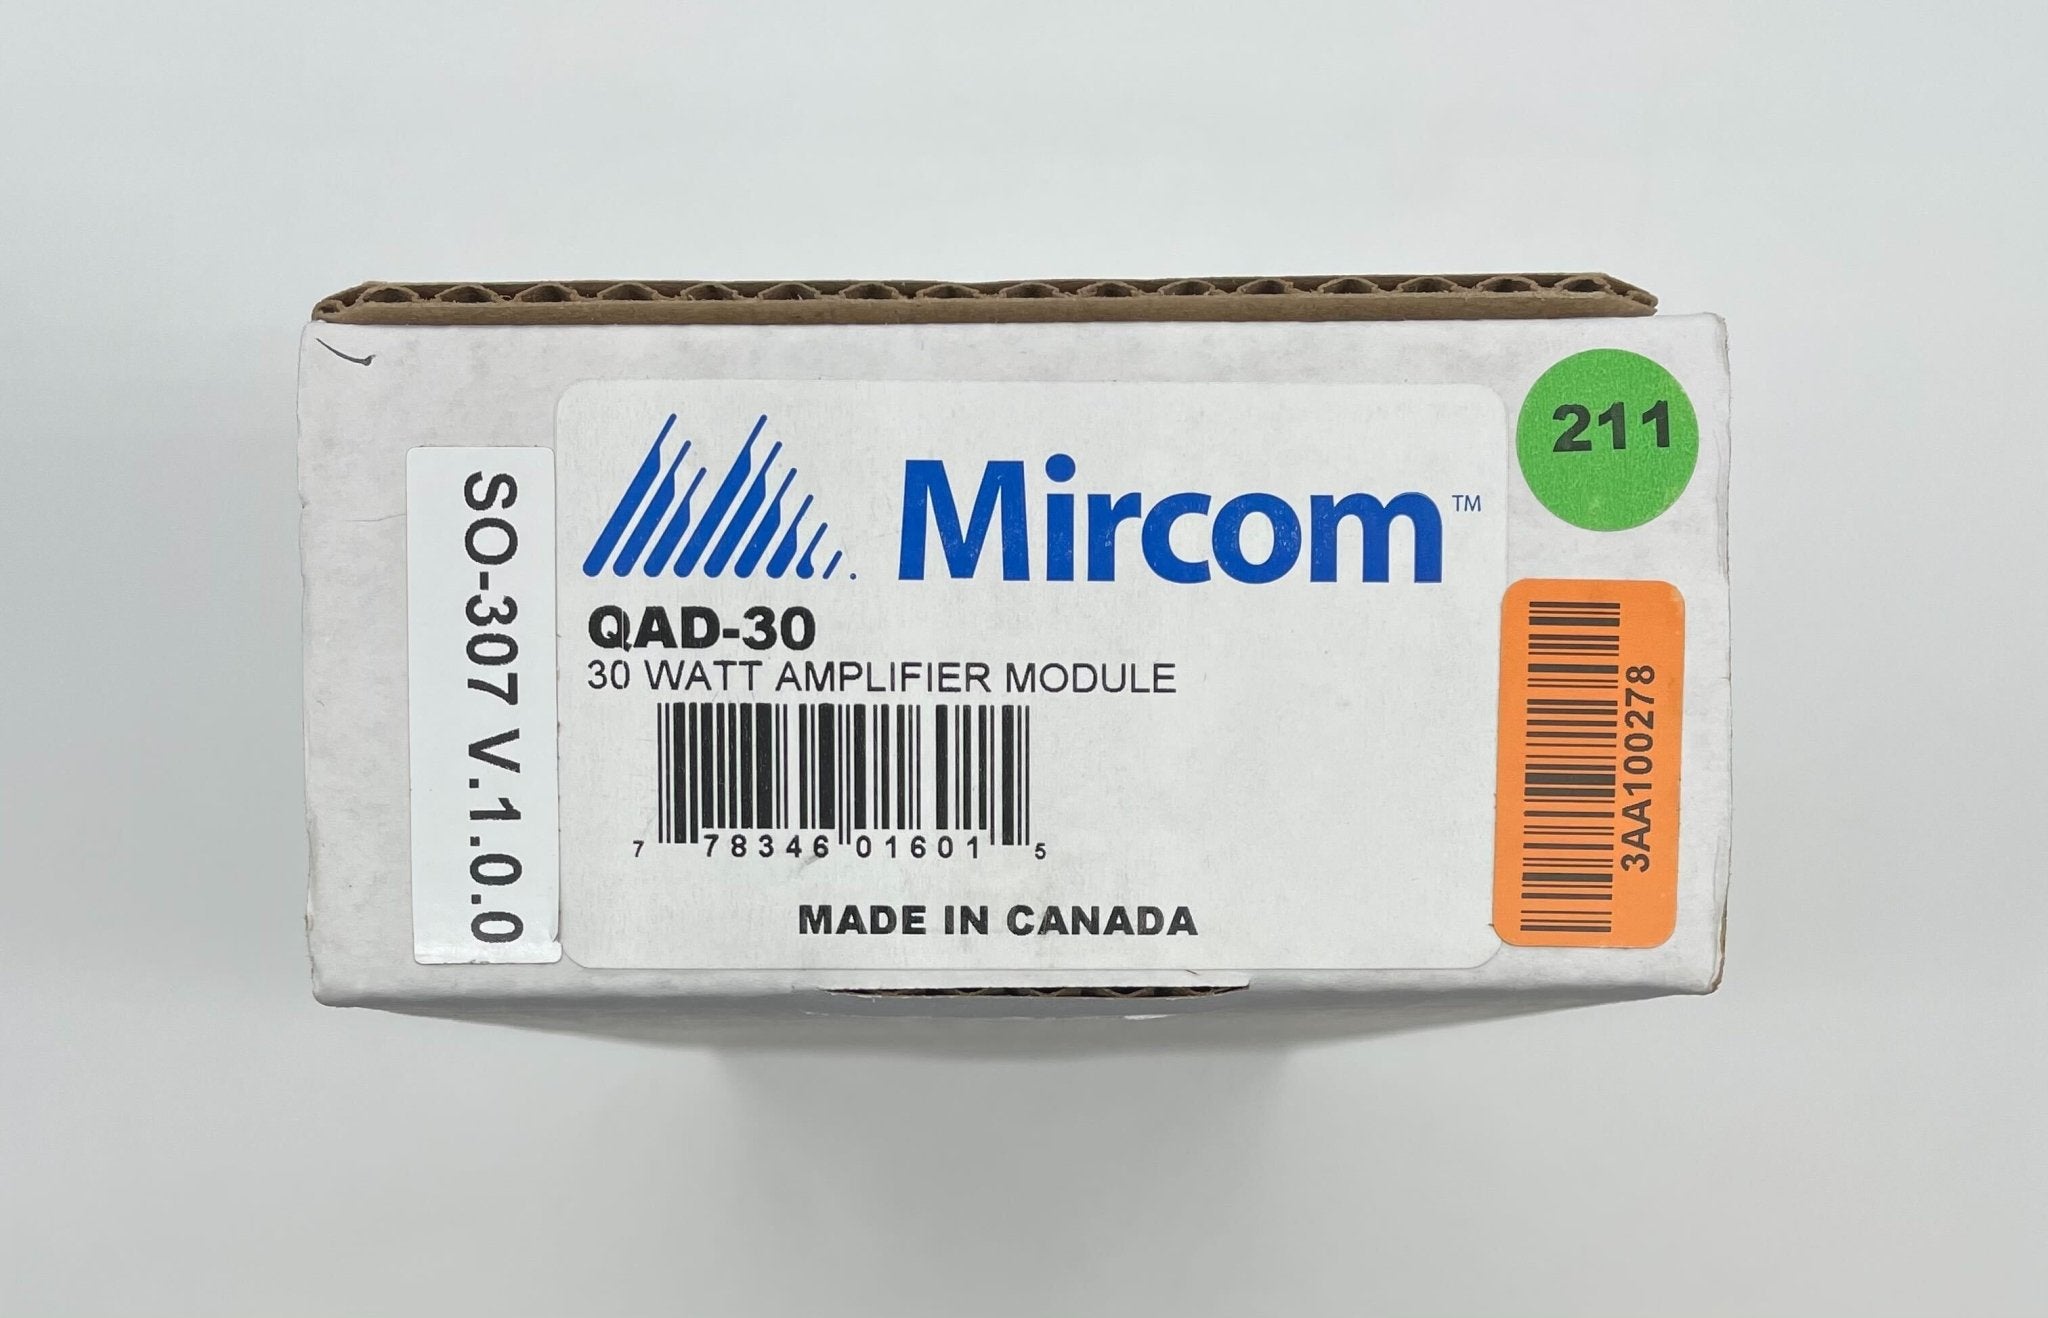 Mircom QAD-30 30 Watt Amplifier Module - The Fire Alarm Supplier